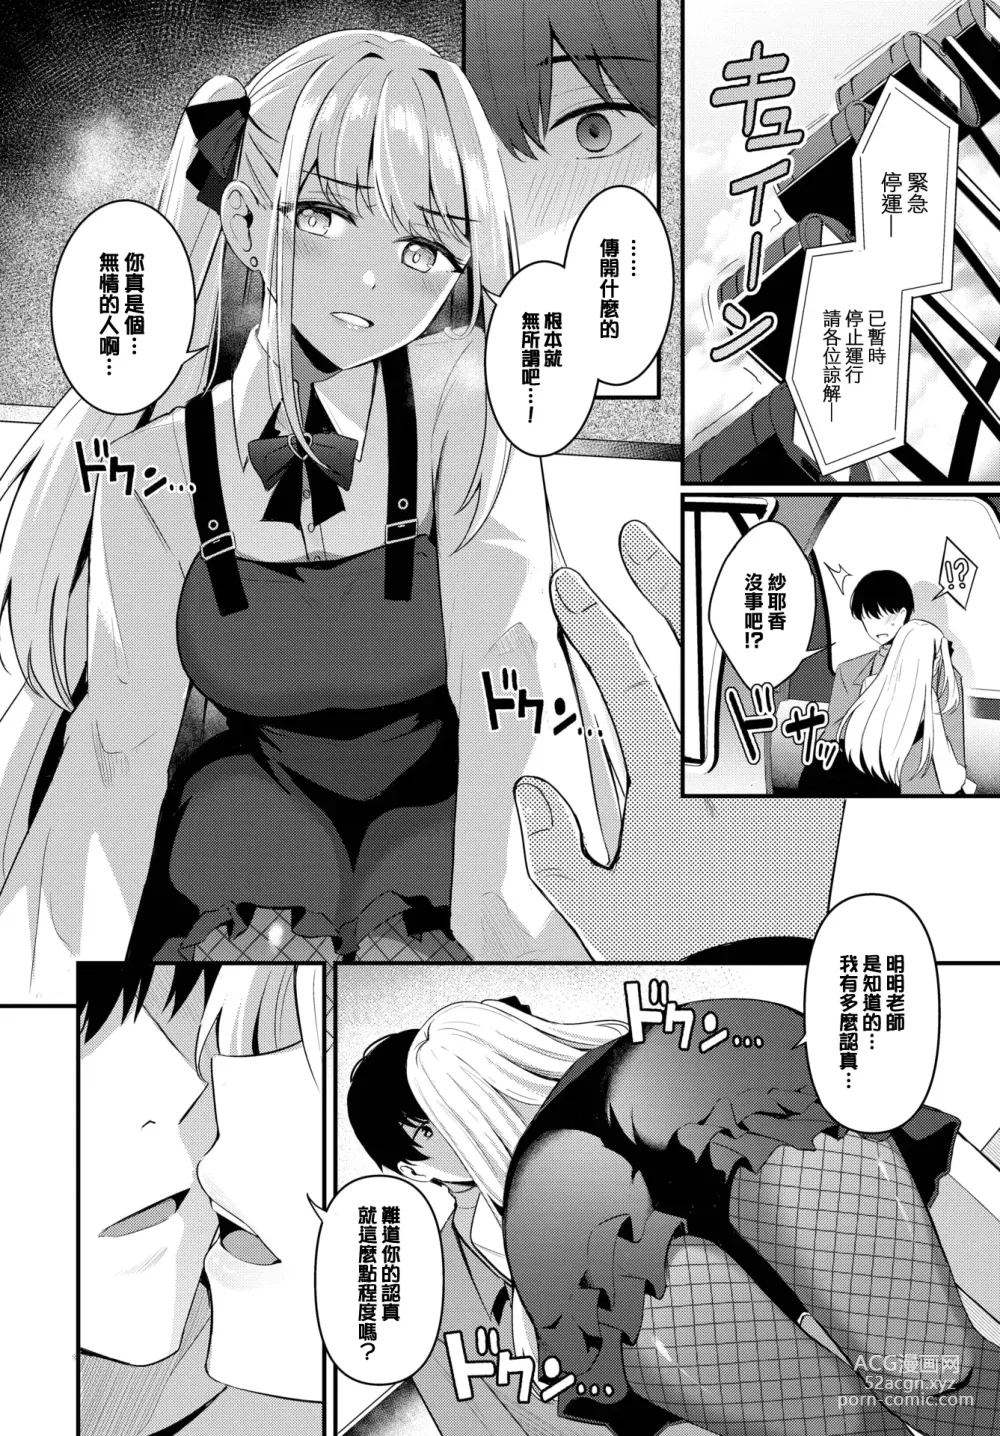 Page 5 of manga Joou no Shitsuke - Queens discipline ~after~